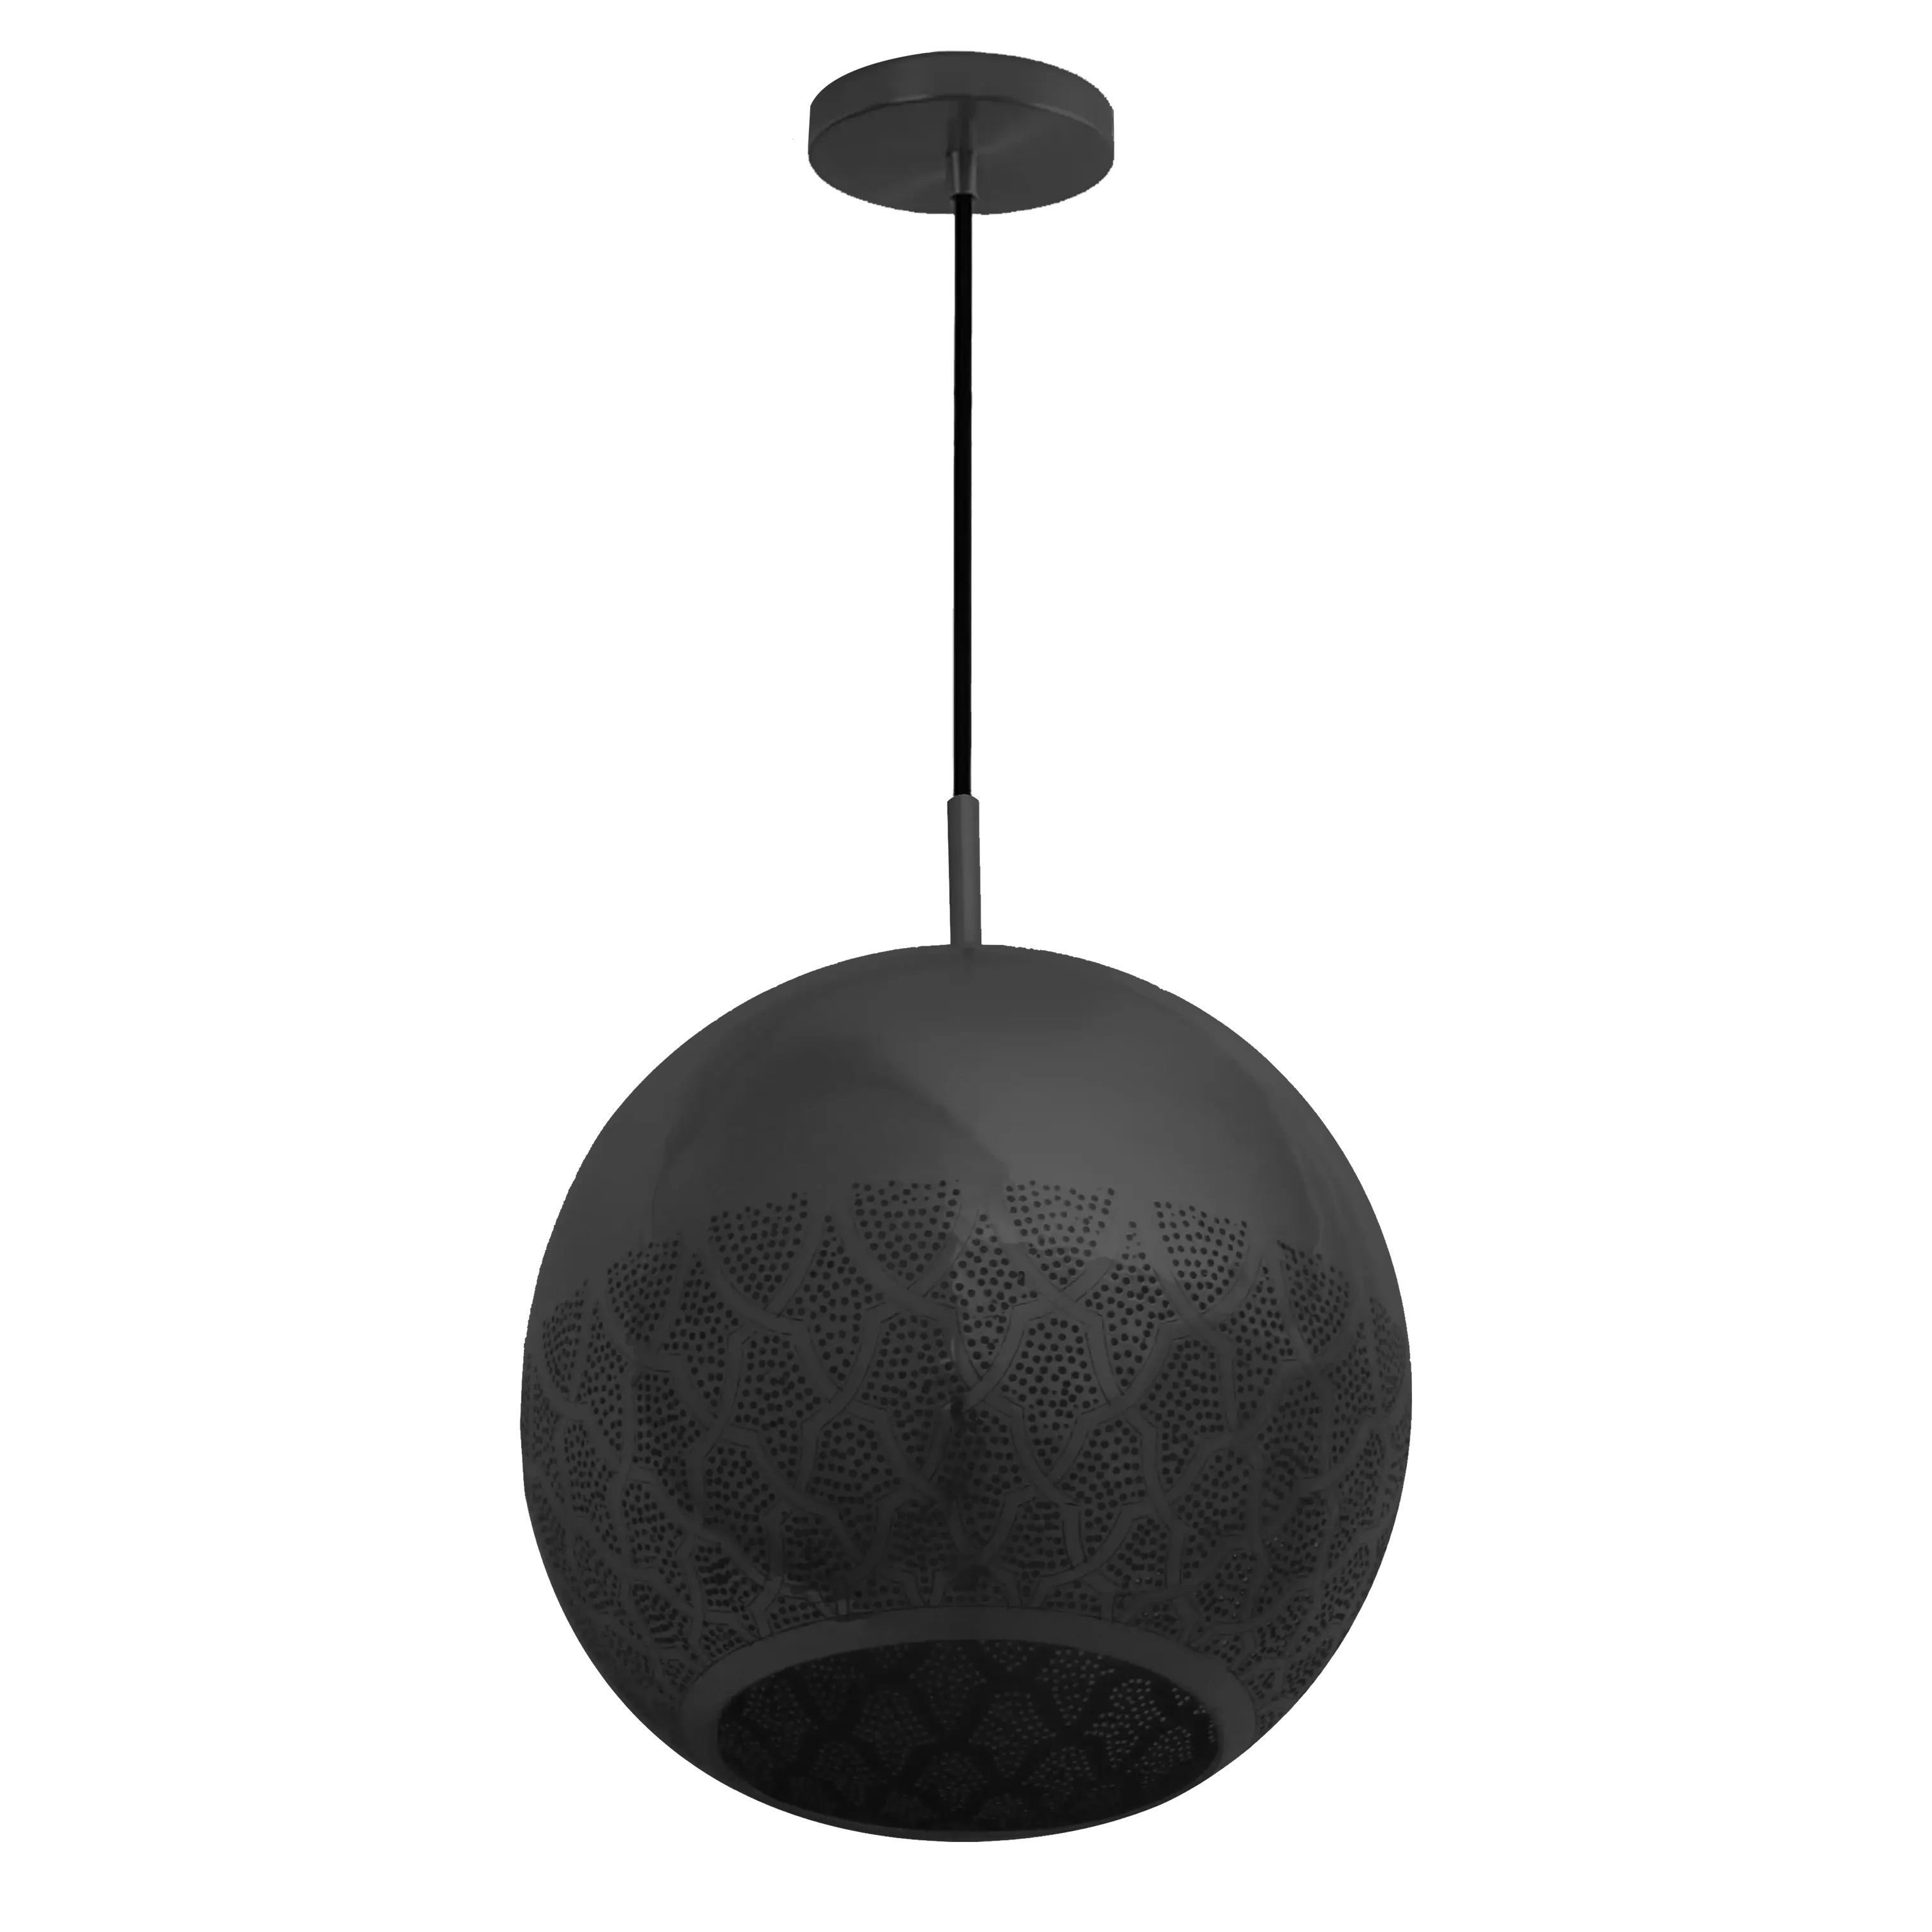 Dounia home Pendant light in  black  made of Metal, Model: Nur reversed